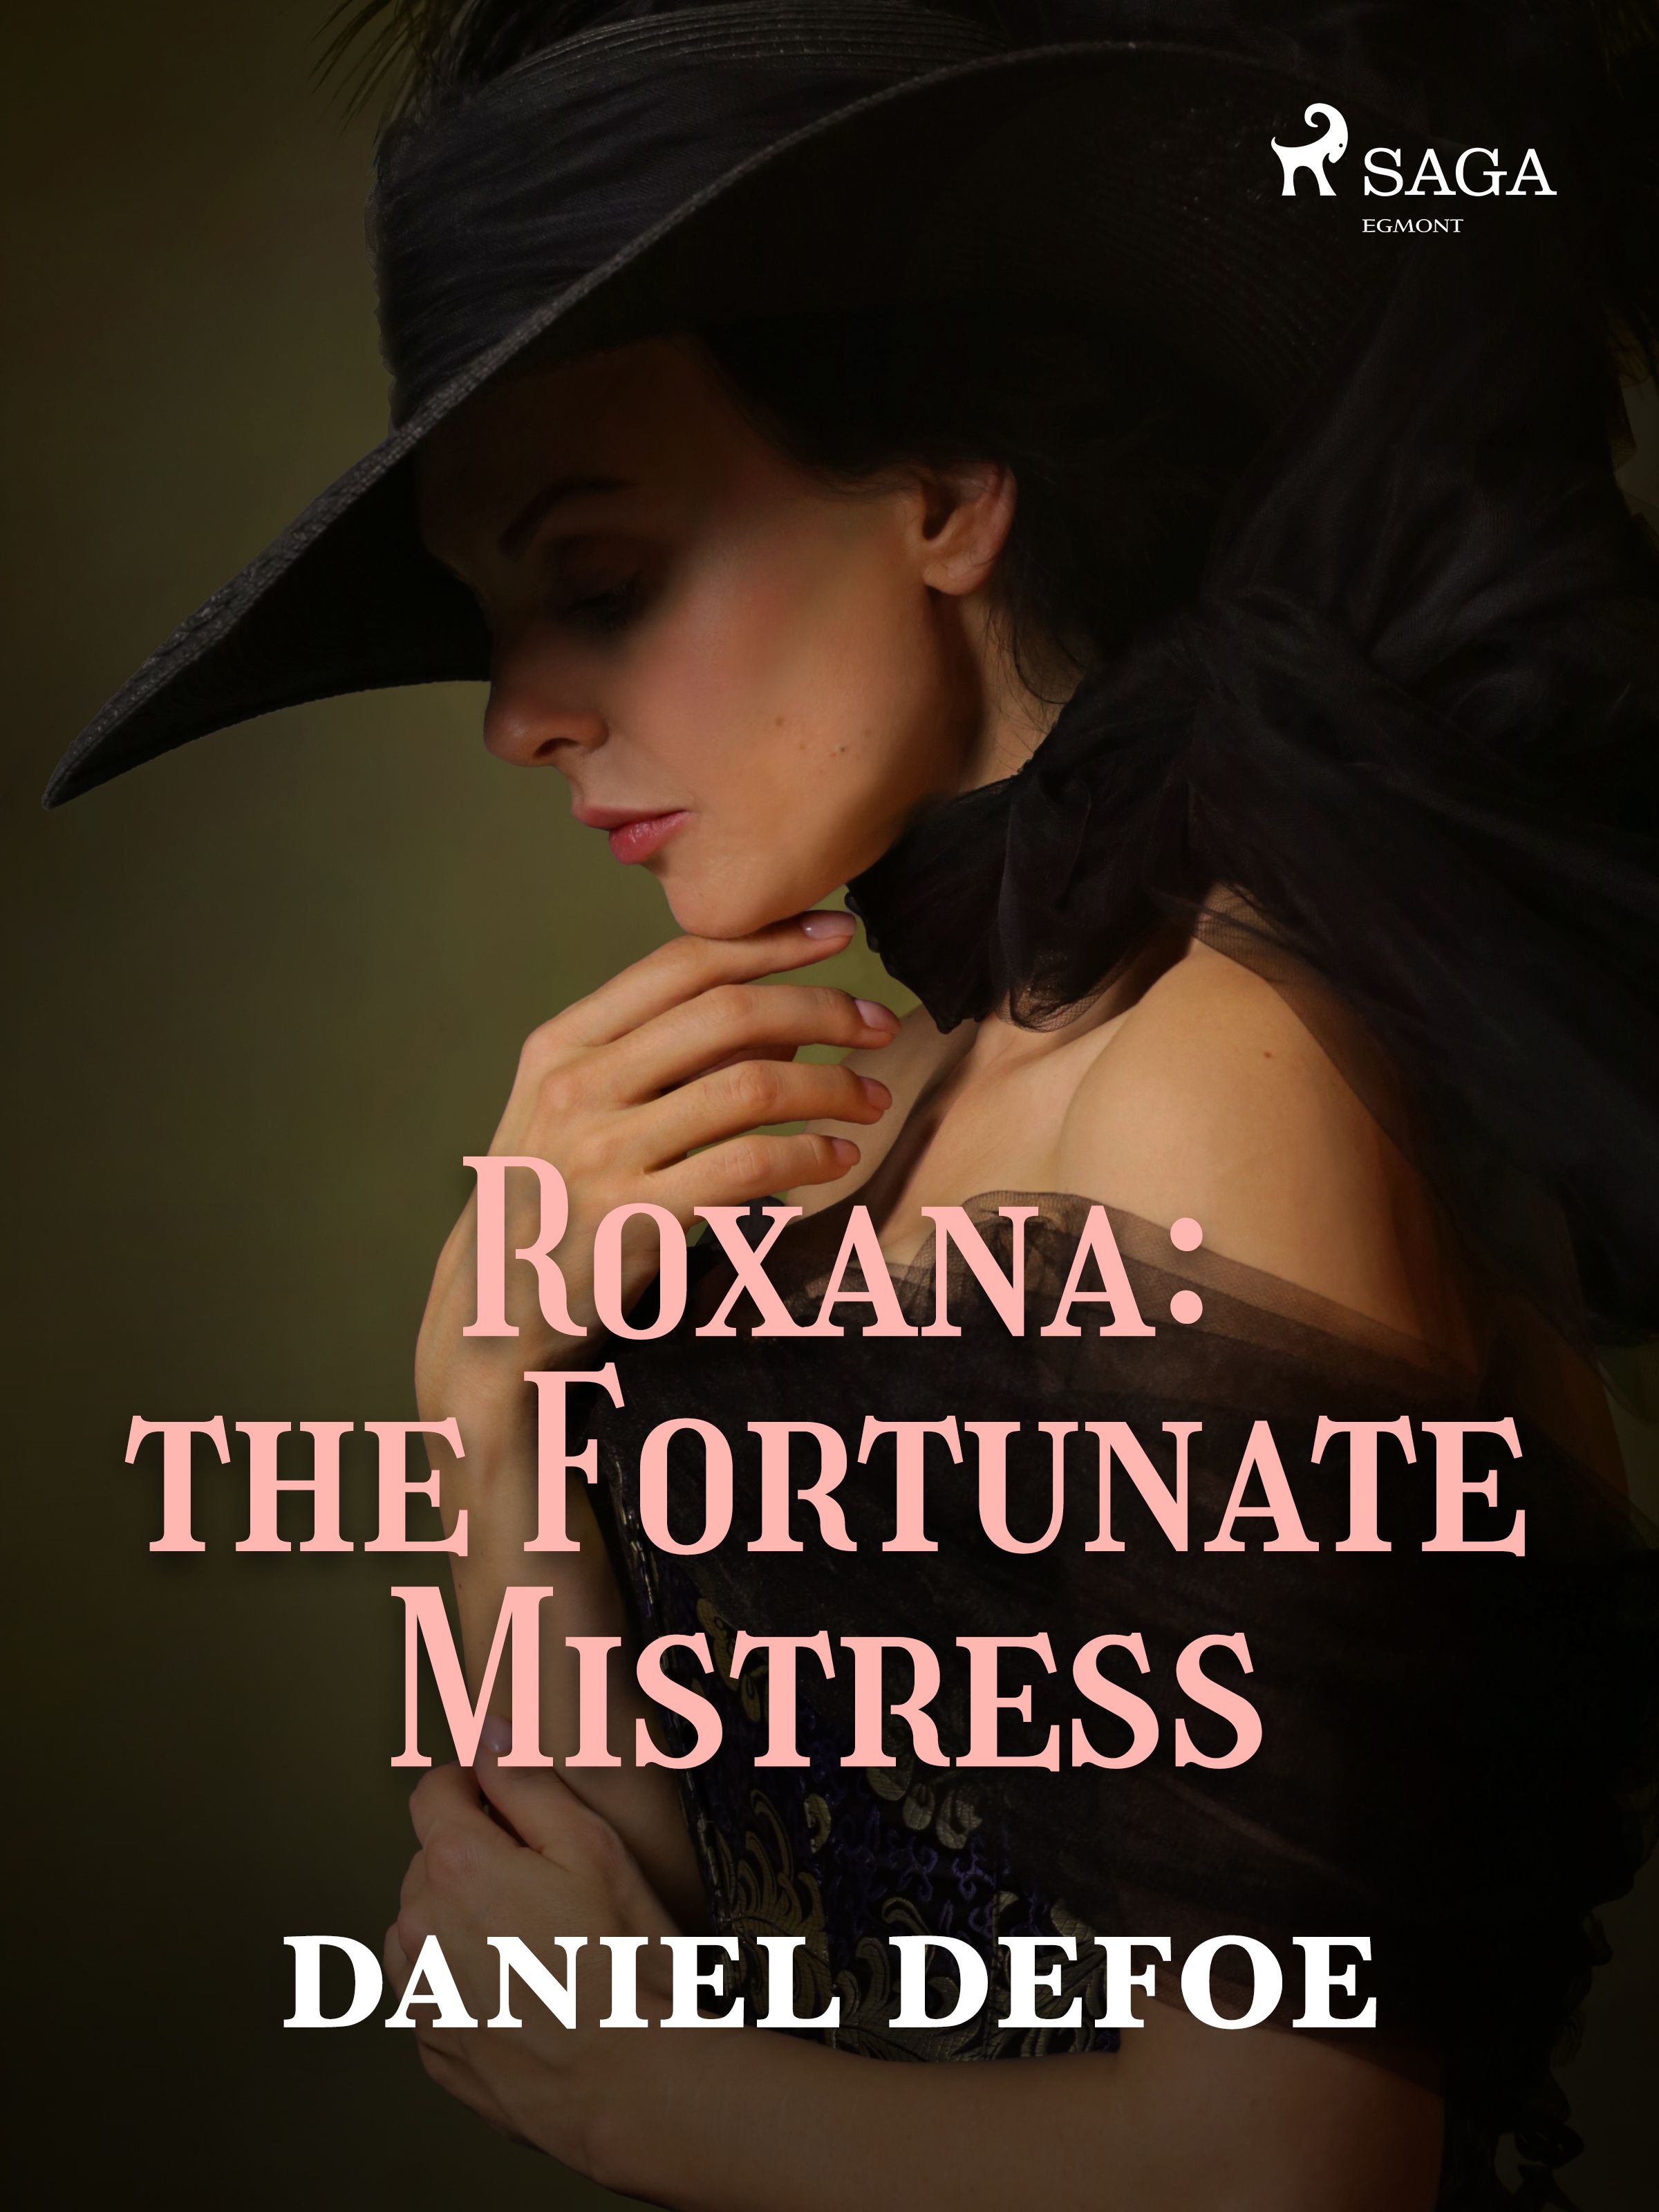 Roxana: The Fortunate Mistress, eBook by Daniel Defoe